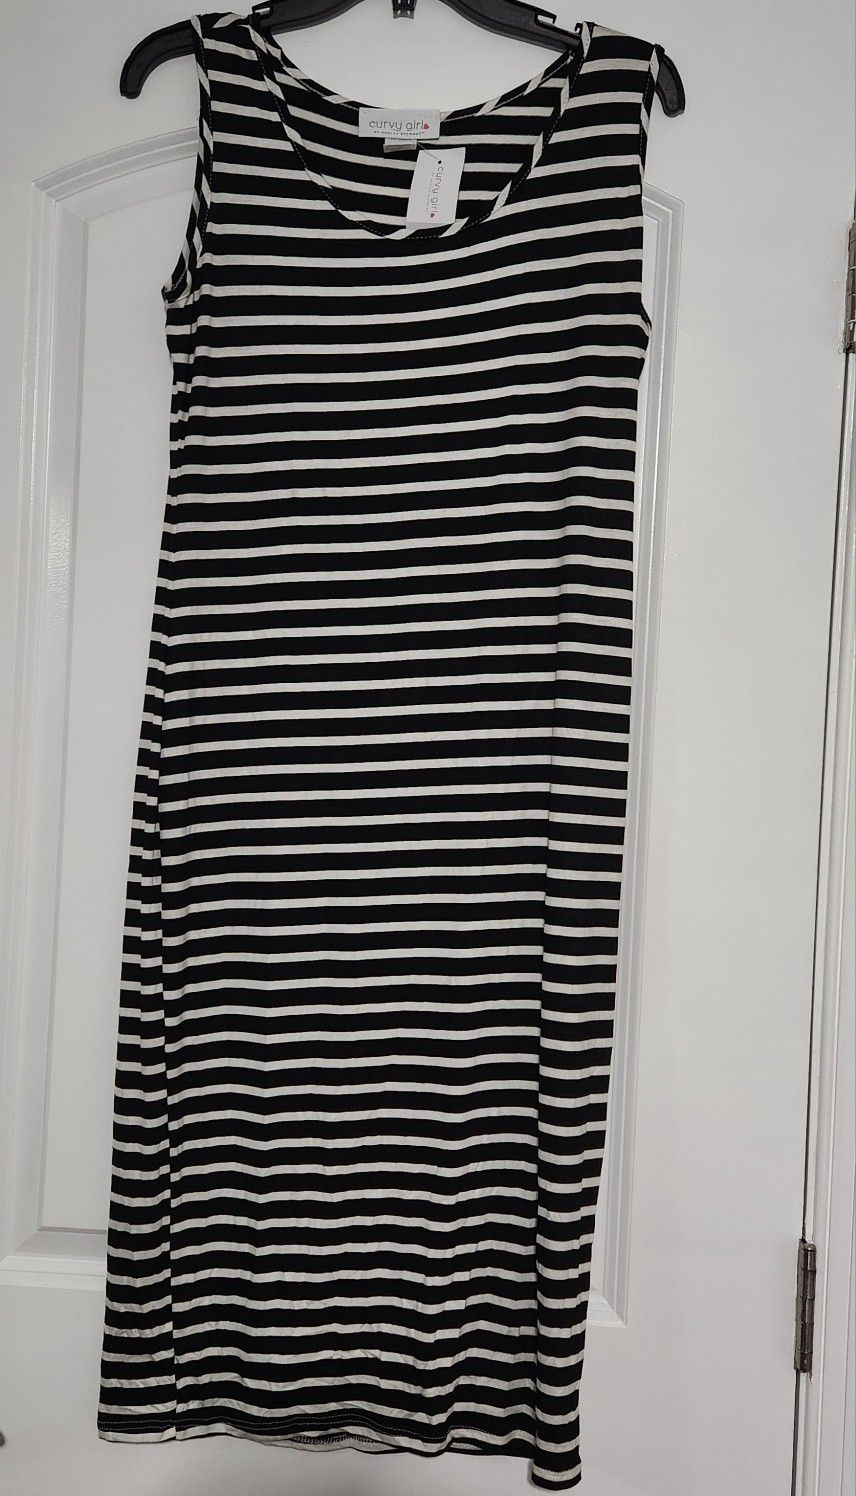 Curvy Girl by Ashley Stewart Black and White Striped 1X Dress